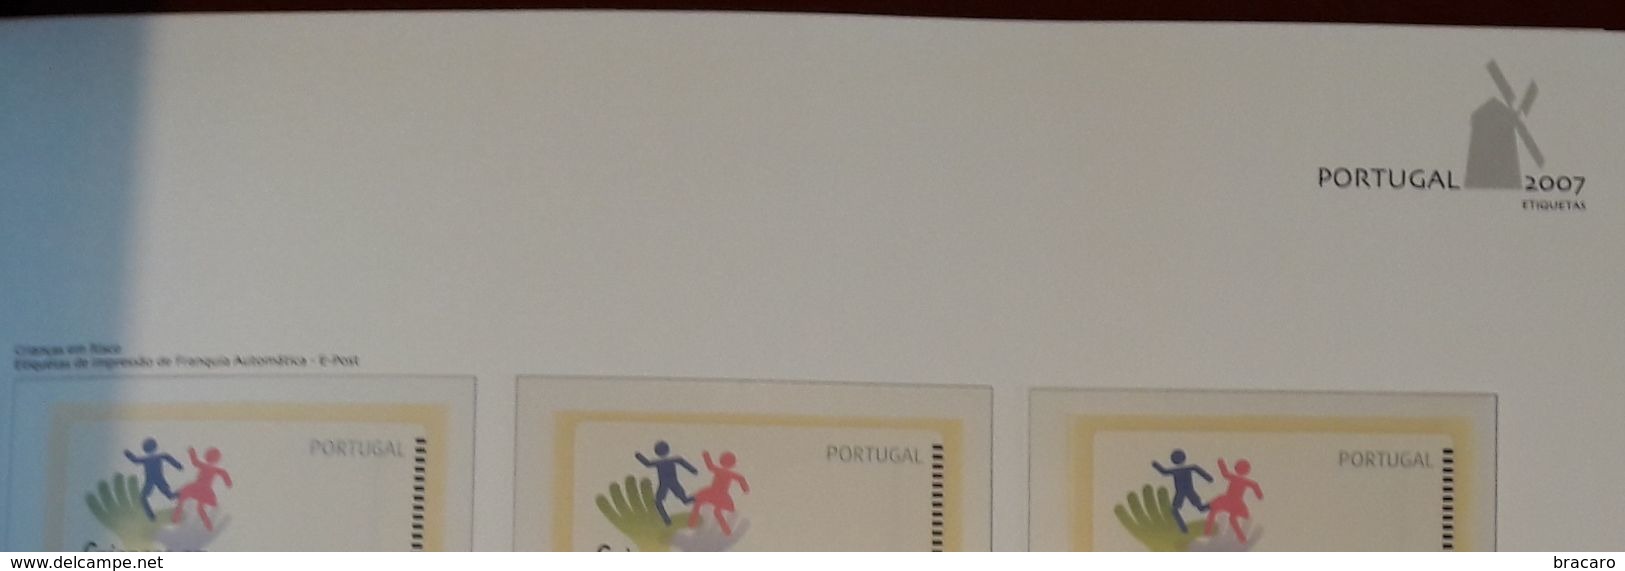 PORTUGAL - ÁLBUM FILATÉLICO - full year stamps + blocks + ATM / machine stamps - MNH - 2006